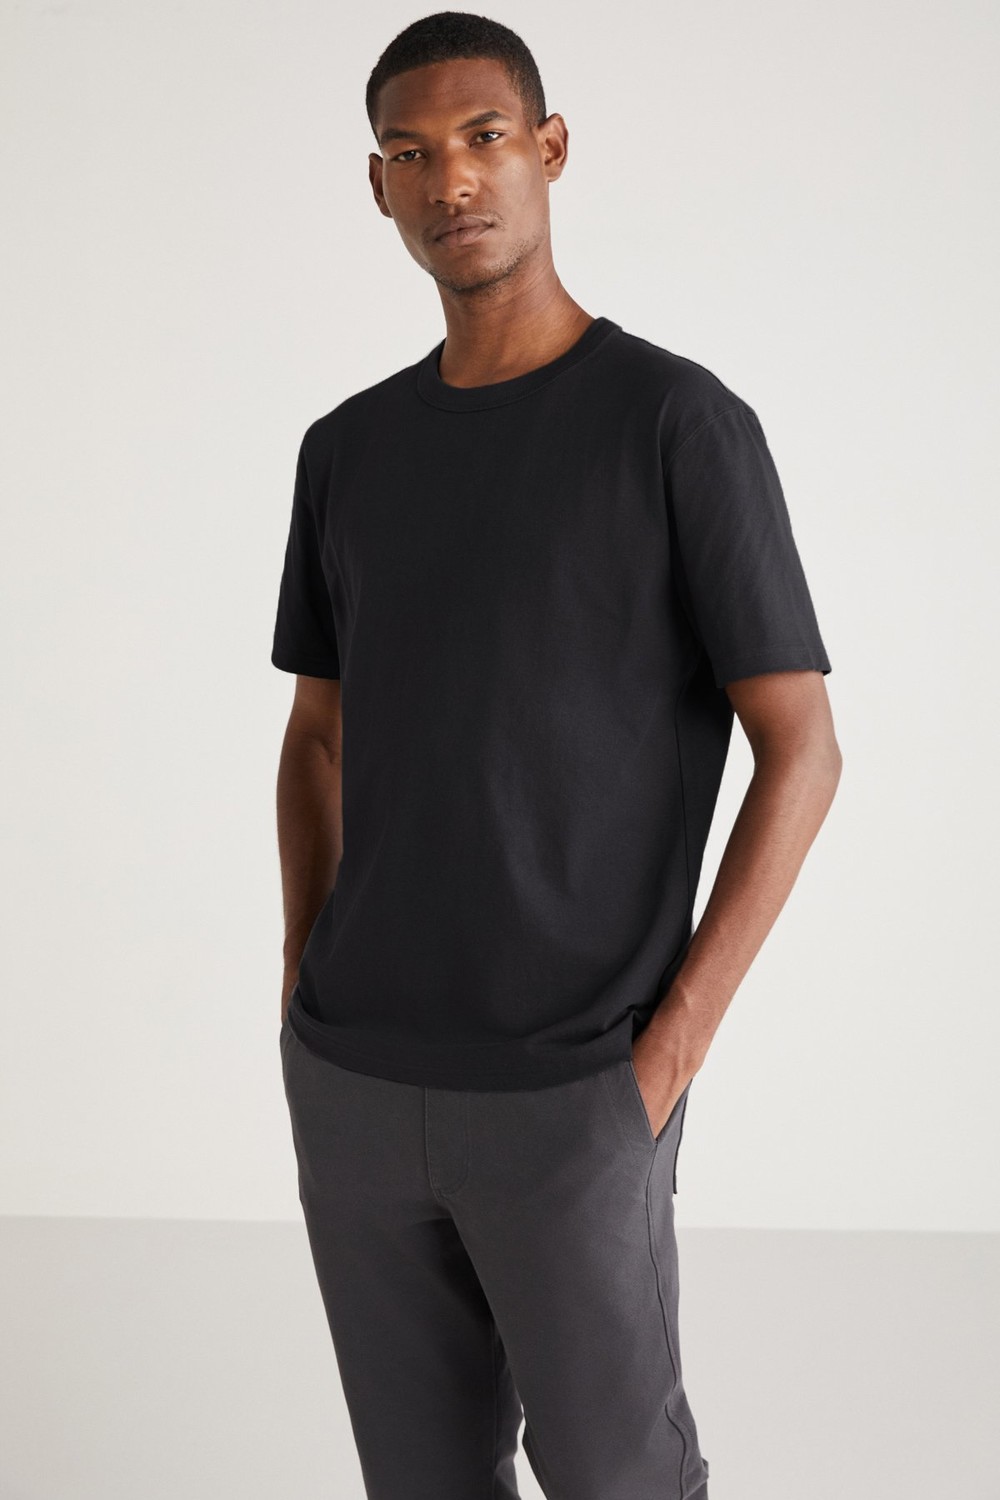 GRIMELANGE CURTIS Basic Relaxed Black Single T-Shirt